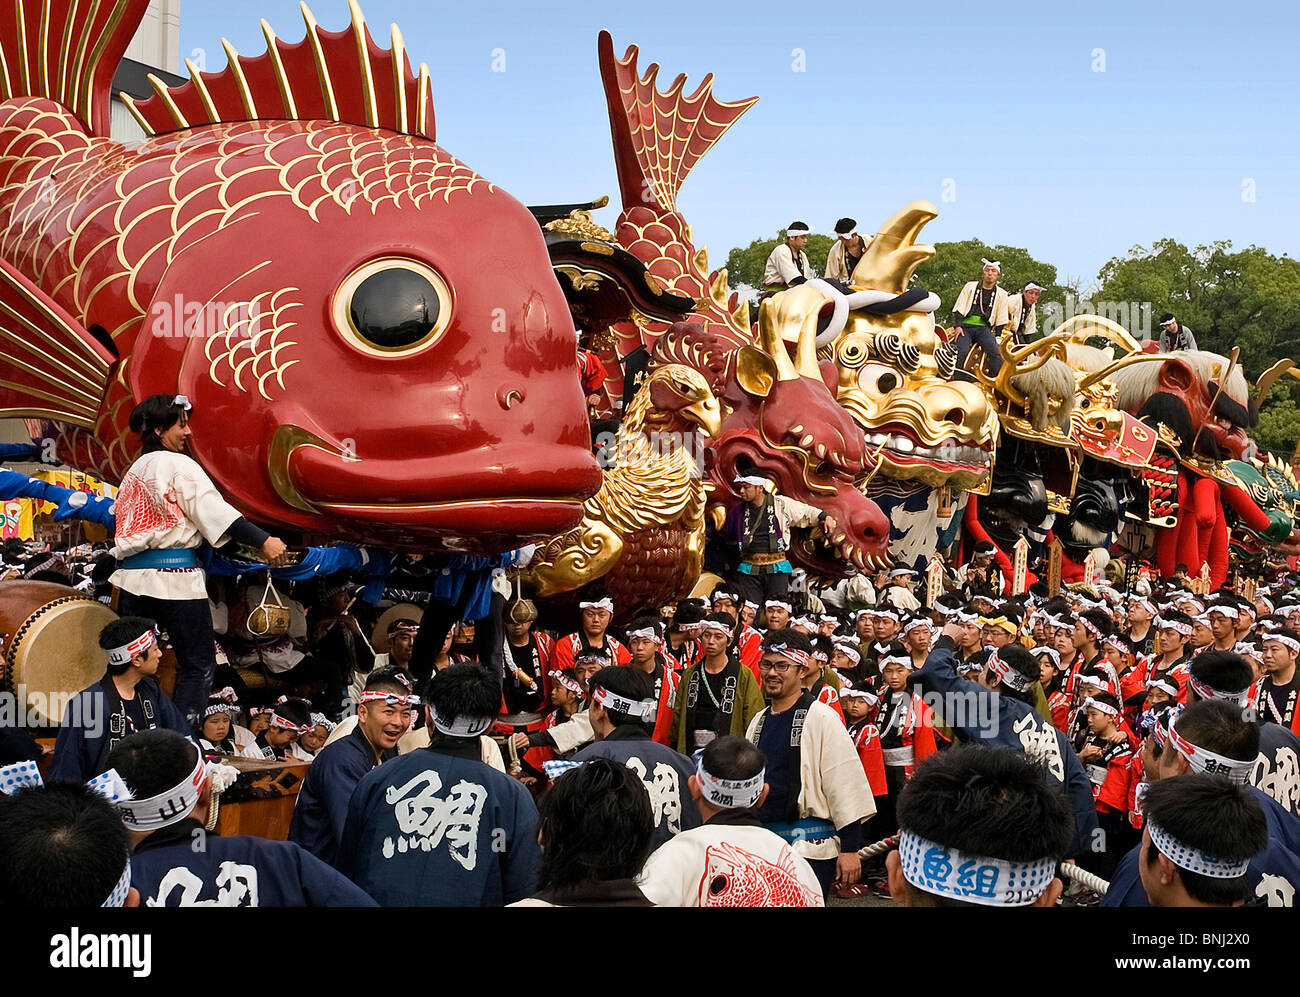 Japan Asia Kyushu island isle Karatsu city Okunichi festival tradition dragon kite crowd of people Stock Photo